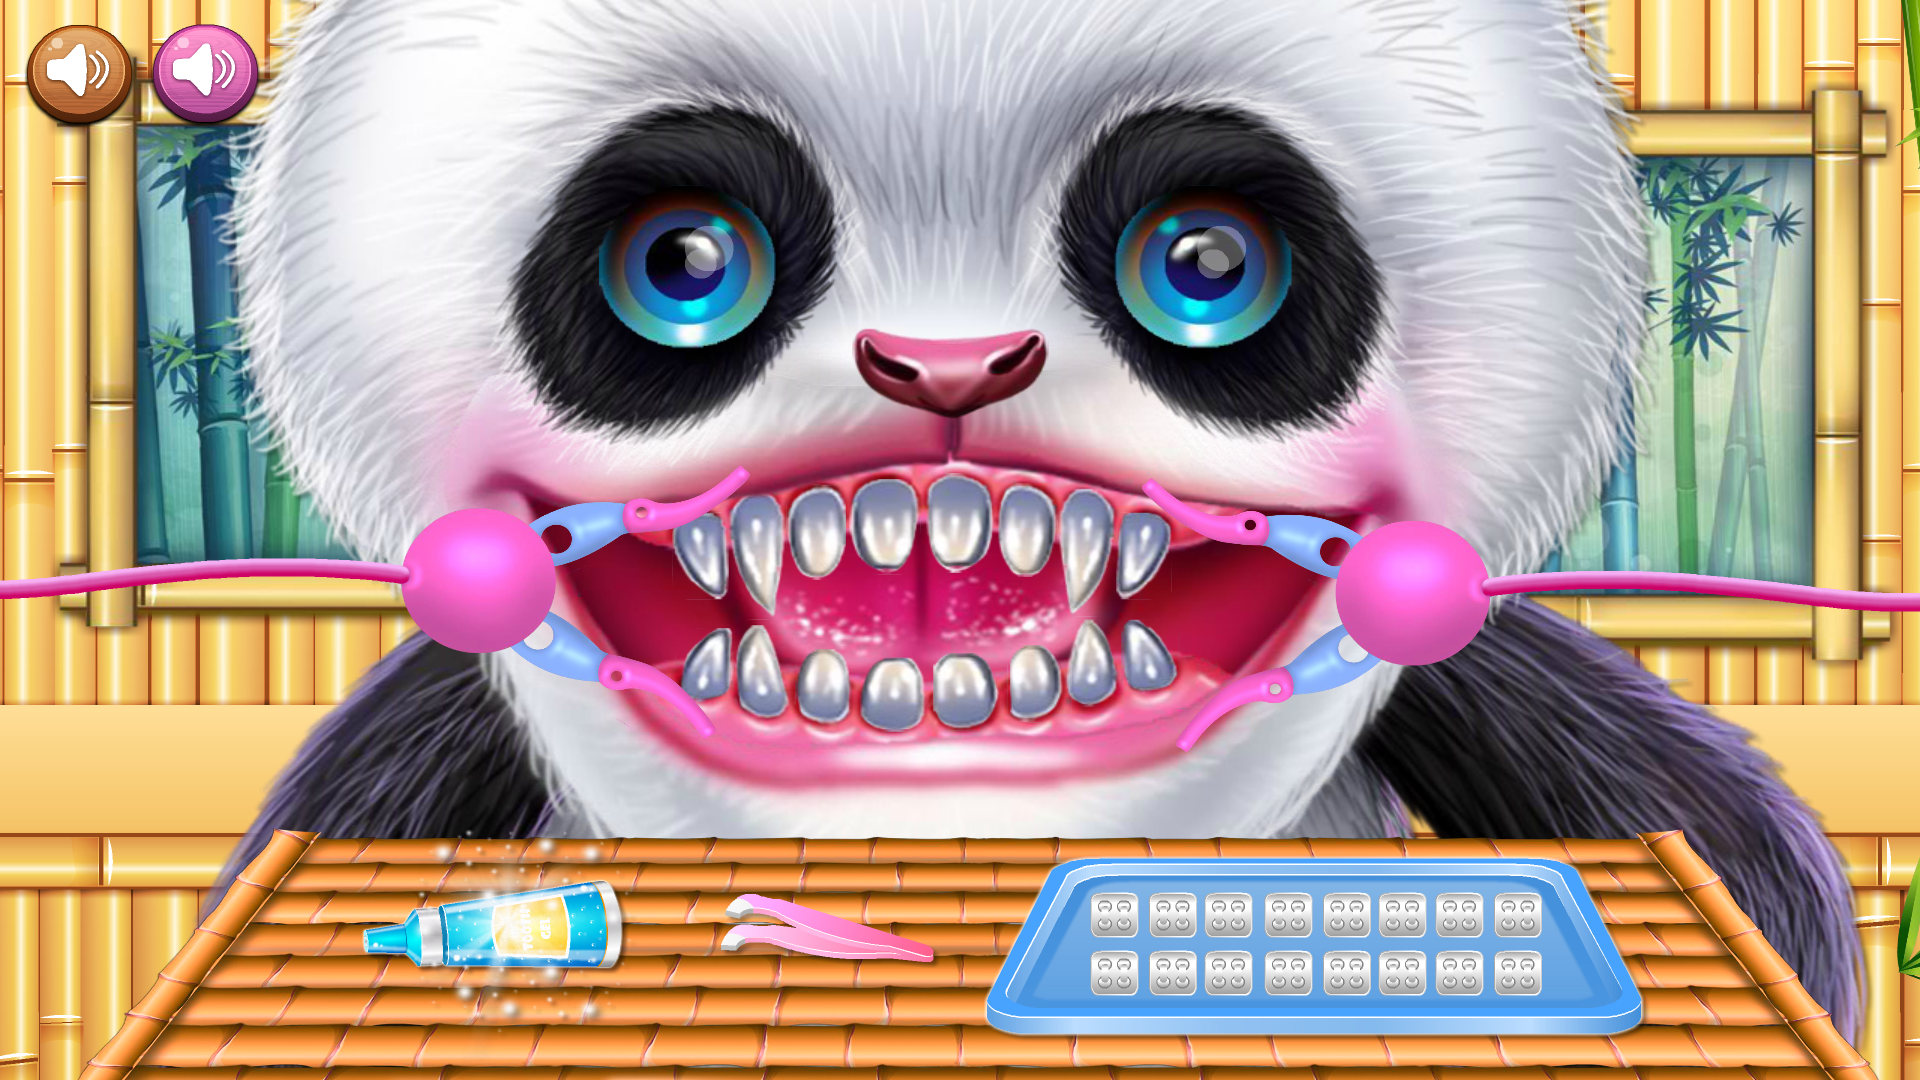 Cute Little Panda Dentist Care遊戲截圖